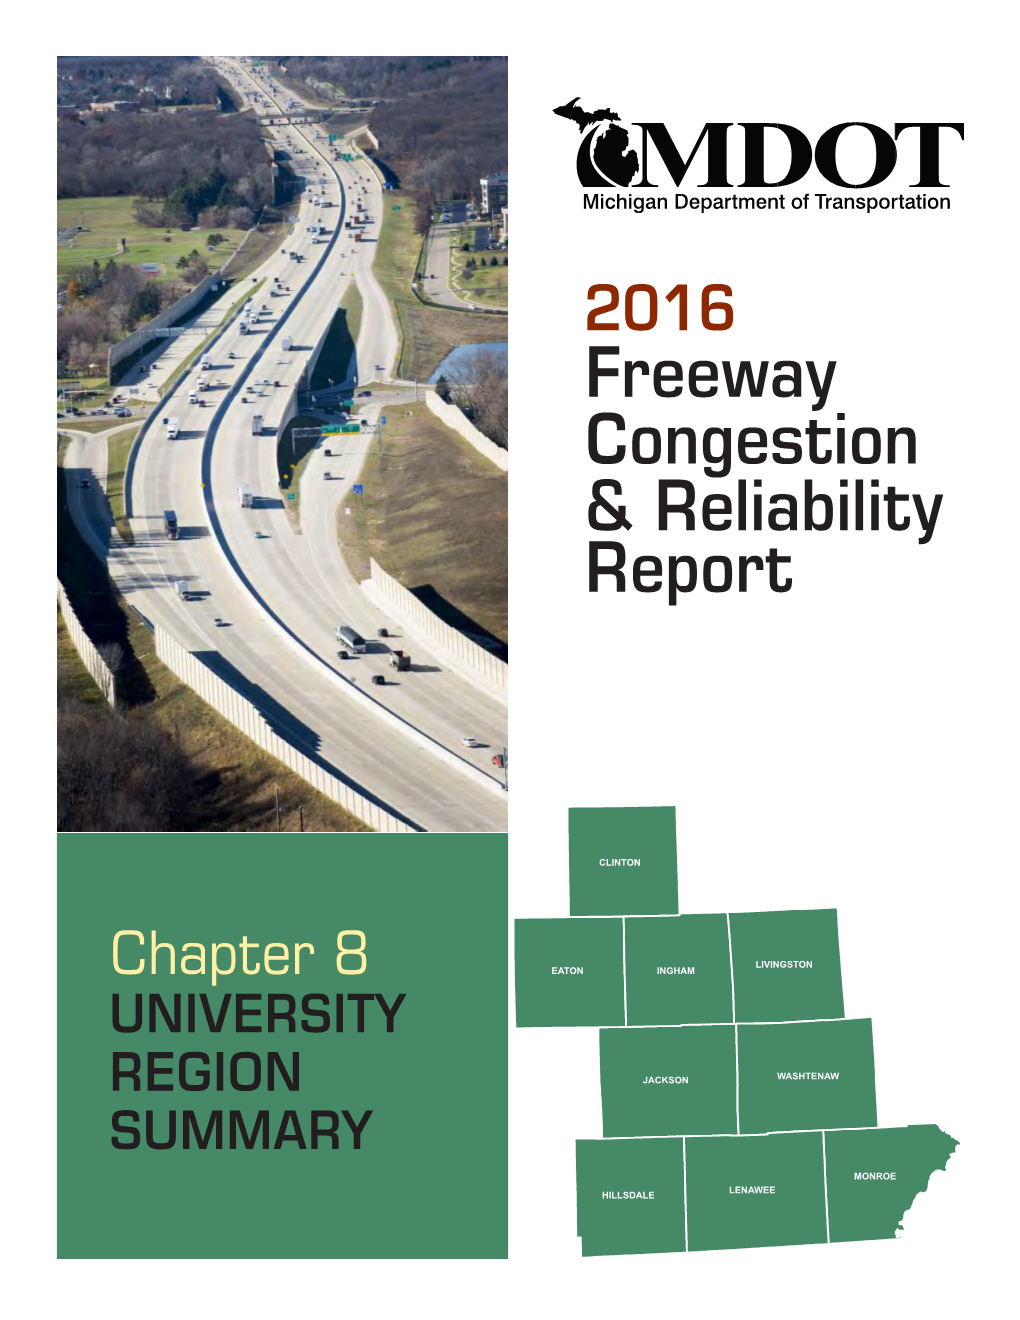 2016 Freeway Congestion & Reliabliity